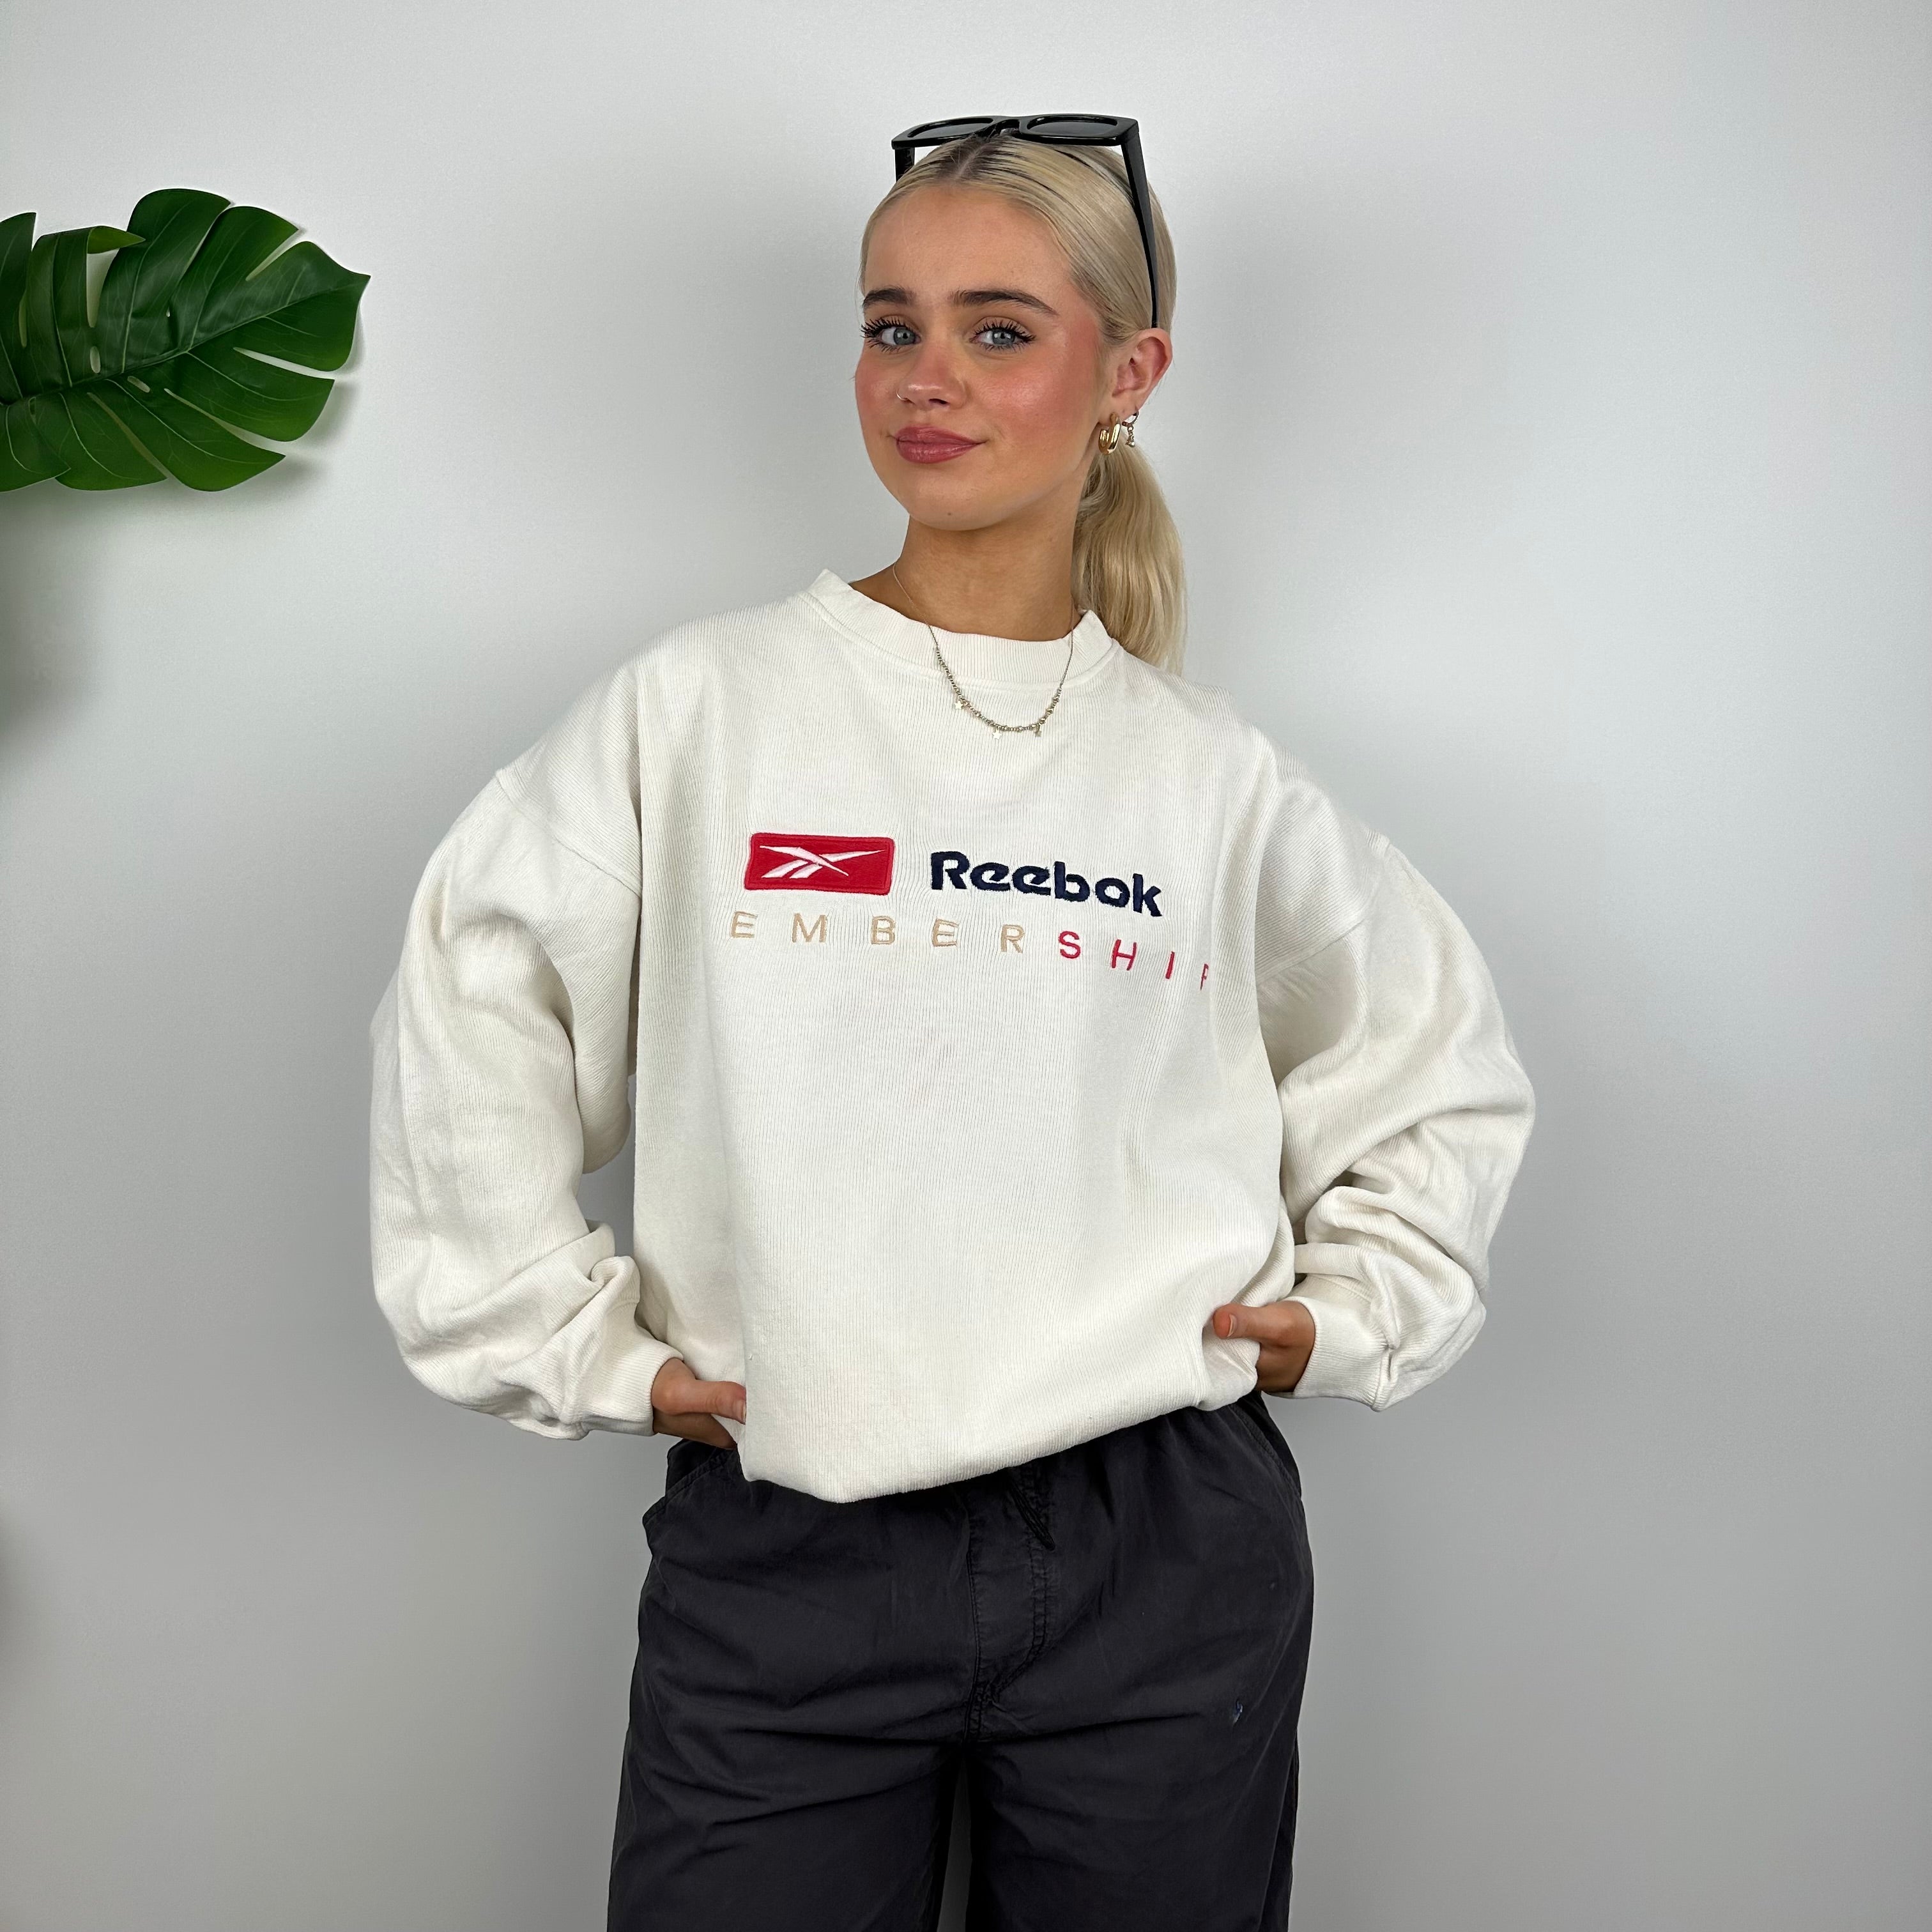 Reebok Membership RARE White Embroidered Spell Out Sweatshirt (M)